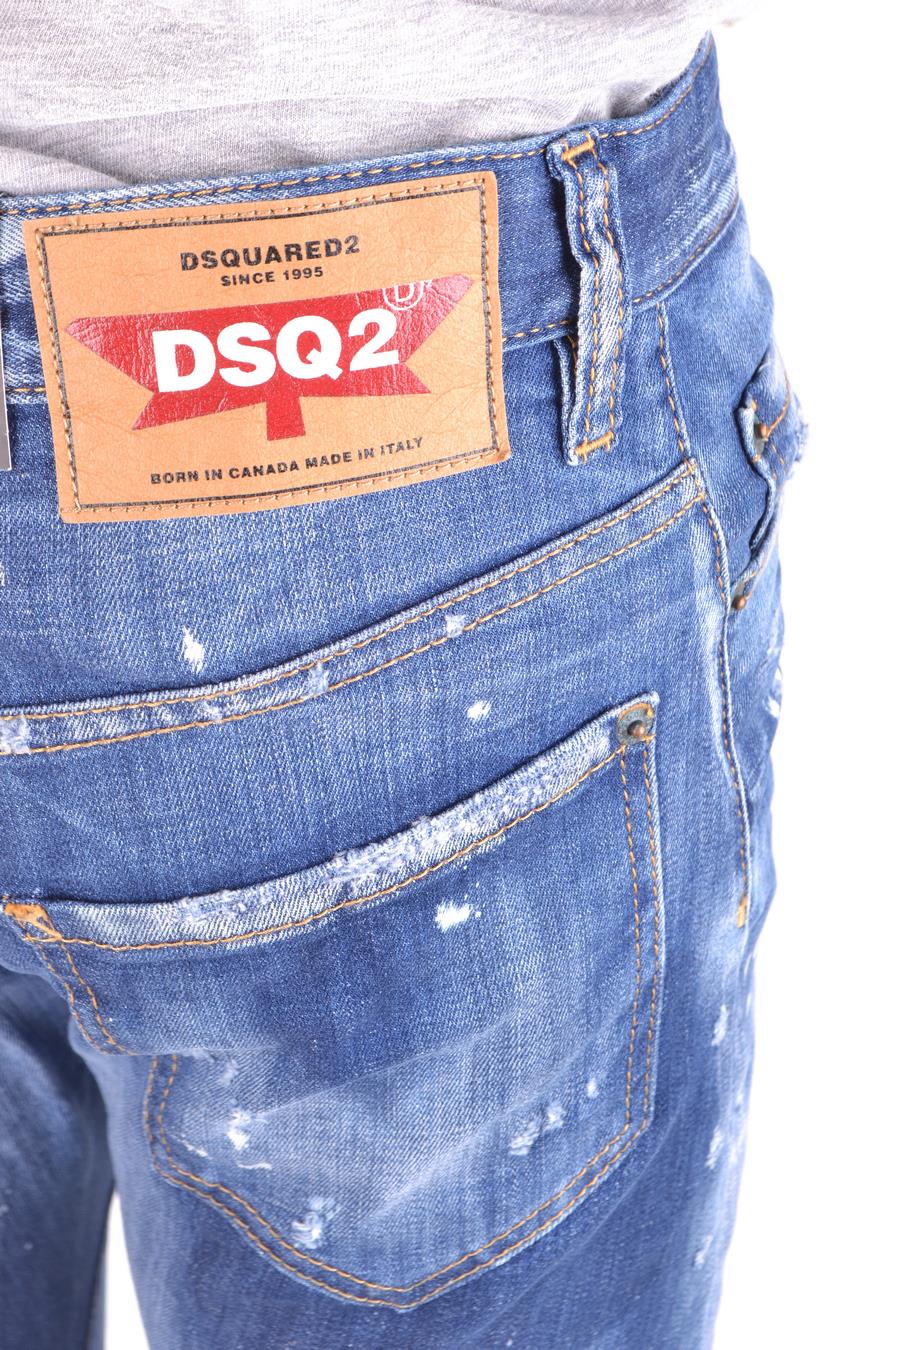 dsquared jeans since 1995 - 52% remise 